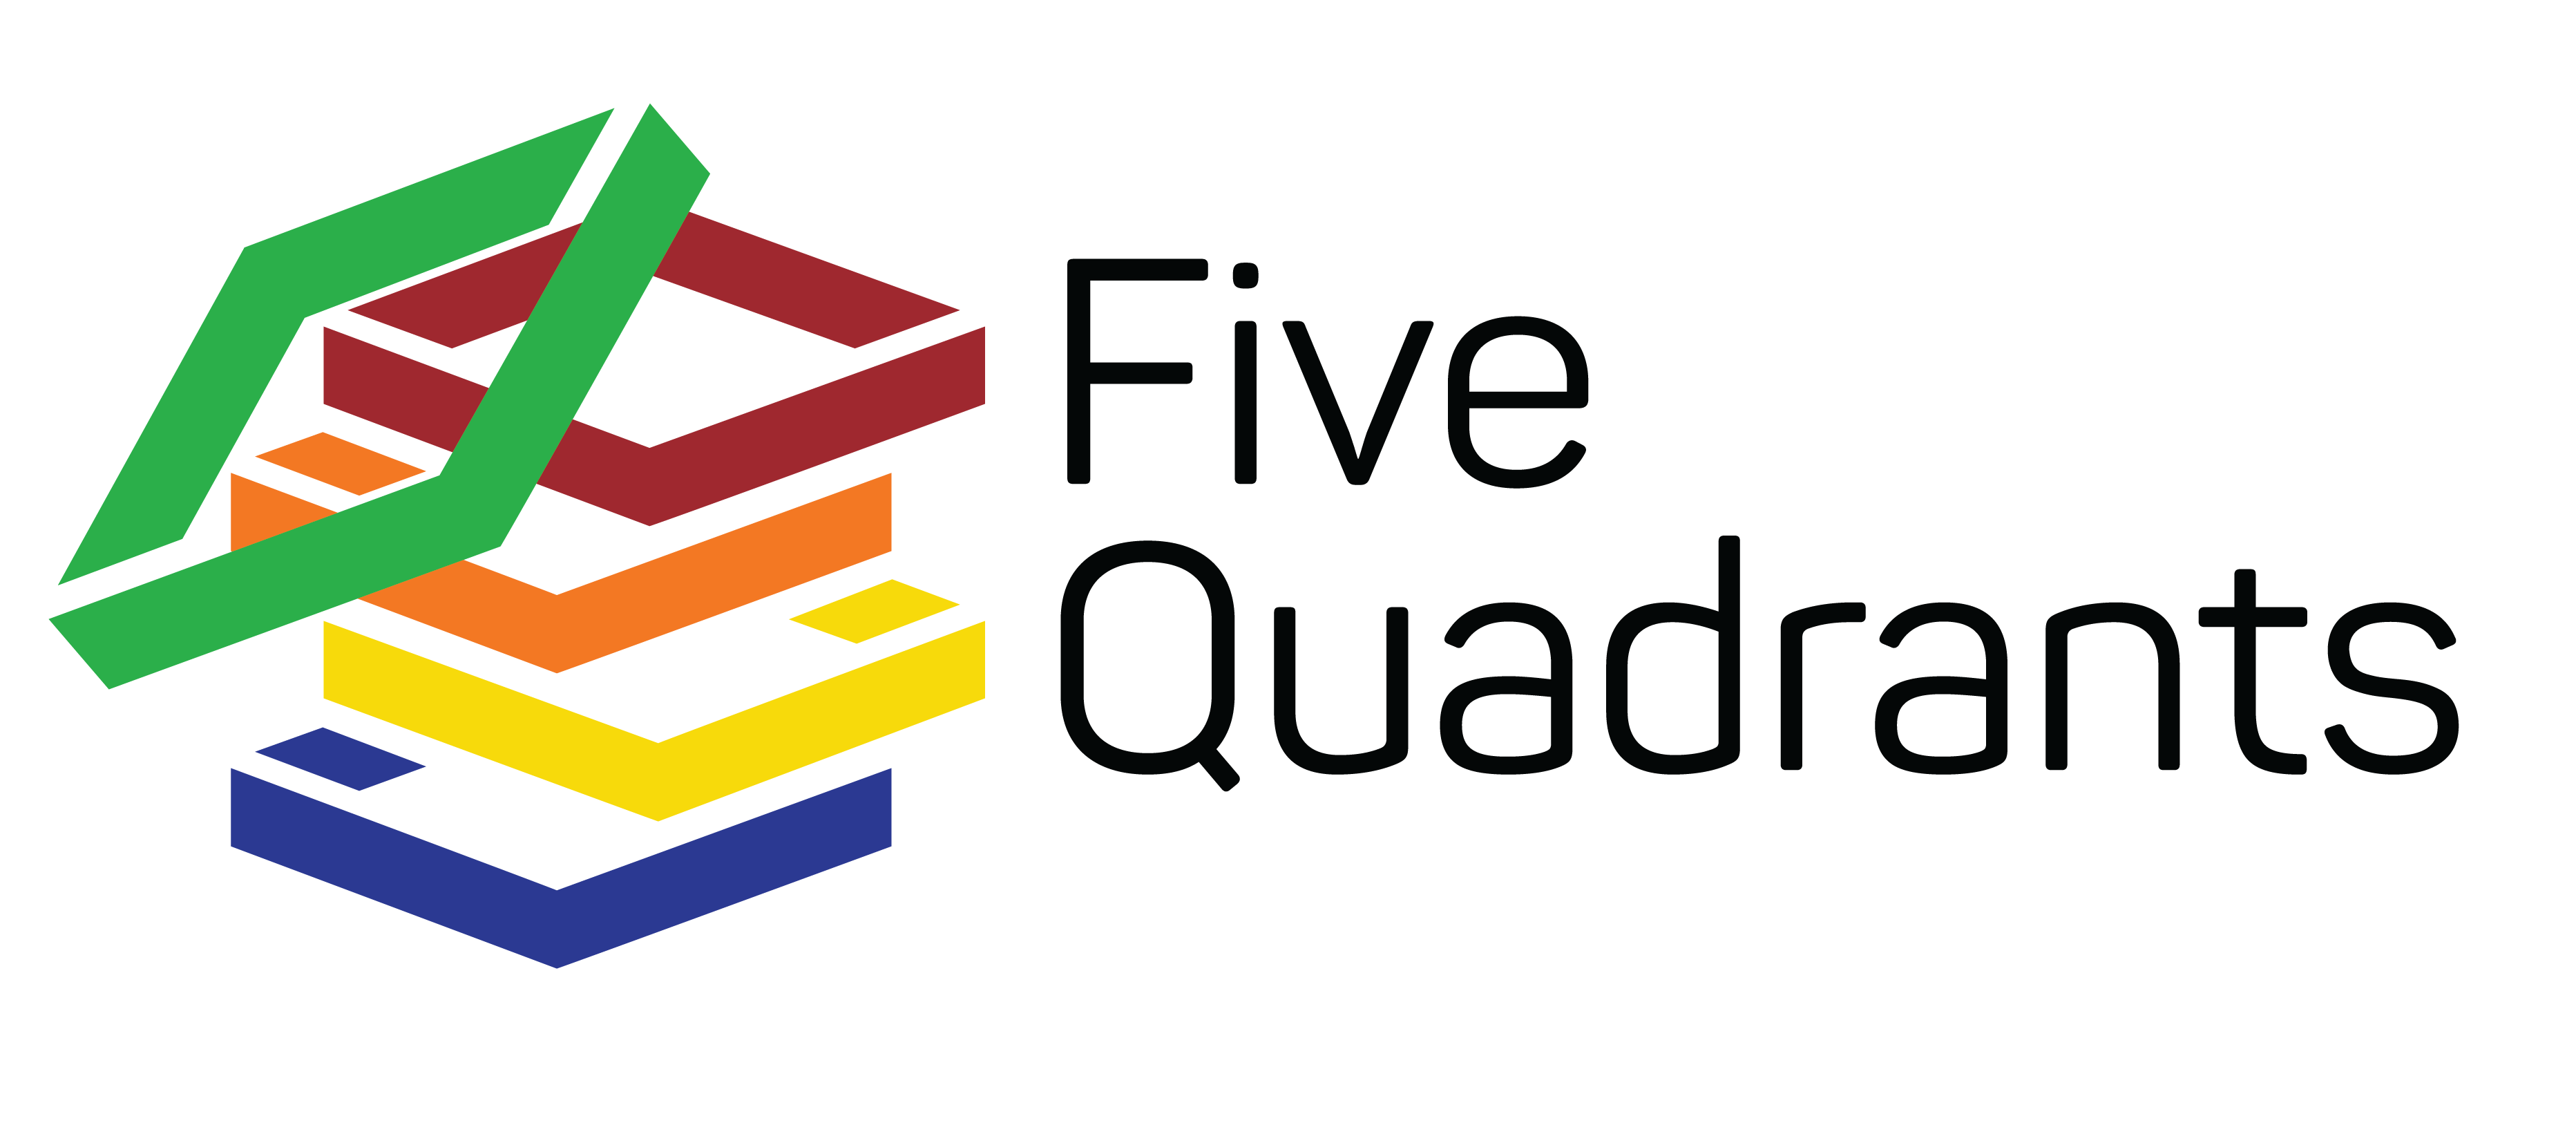 FIVE QUADRANTS